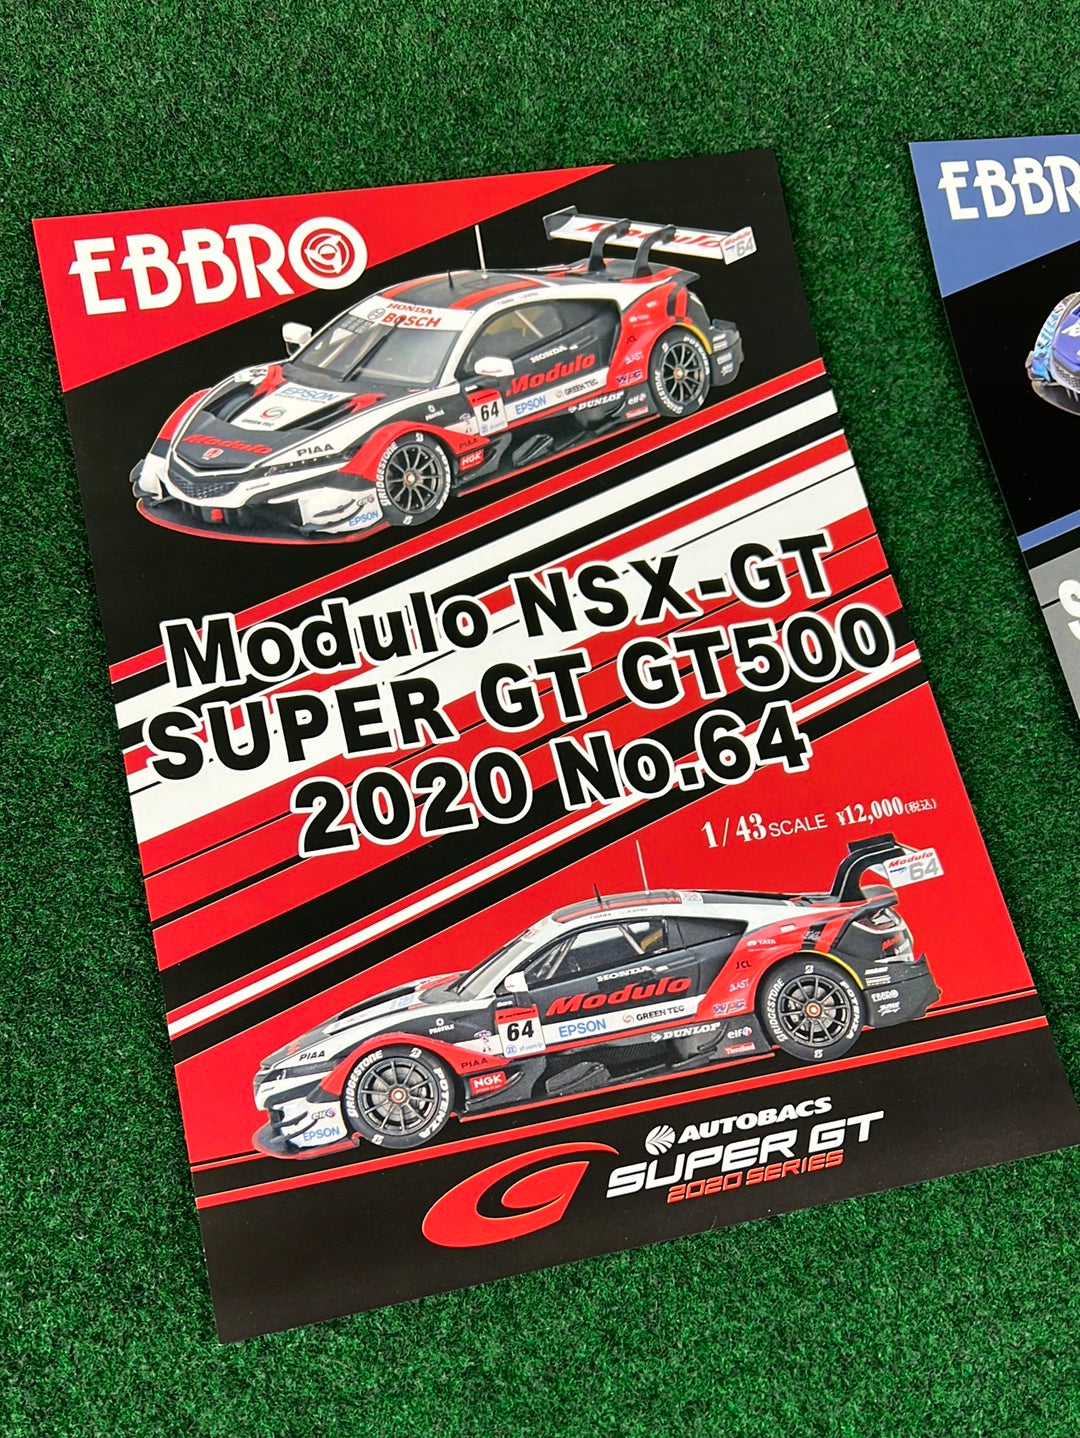 EBBRO - 1/43 Scale Super GT Honda NSX Flyer Set of 4